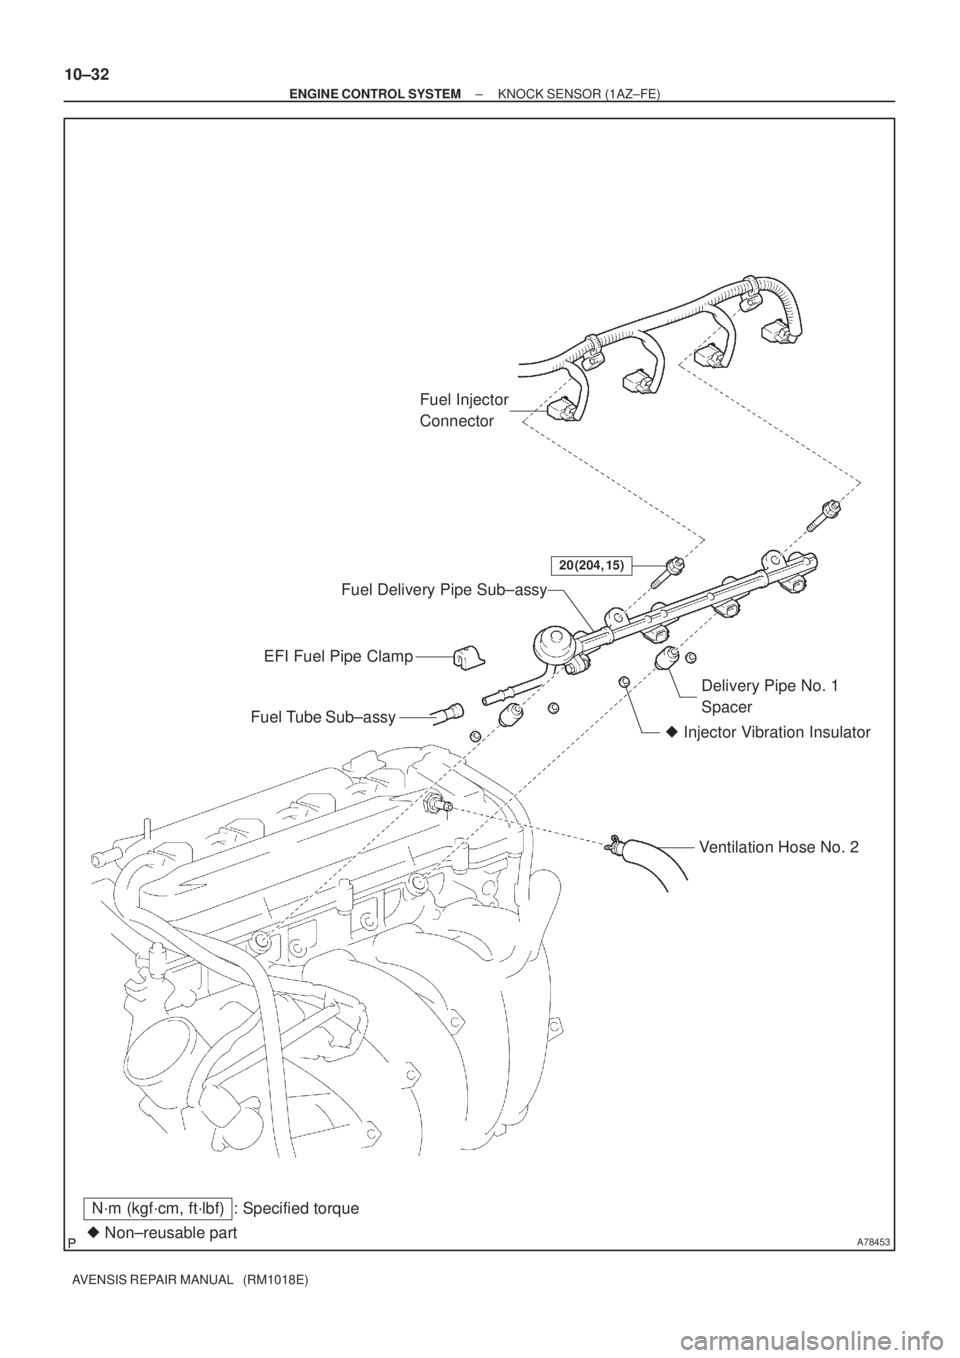 TOYOTA AVENSIS 2005  Service Repair Manual A78453 Non±reusable part
N´m (kgf´cm, ft´lbf) : Specified torque
20 (204, 15)
Fuel Injector 
Connector
EFI Fuel Pipe Clamp
Fuel Tube Sub±assy
 Injector Vibration InsulatorDelivery Pipe No. 1 
S